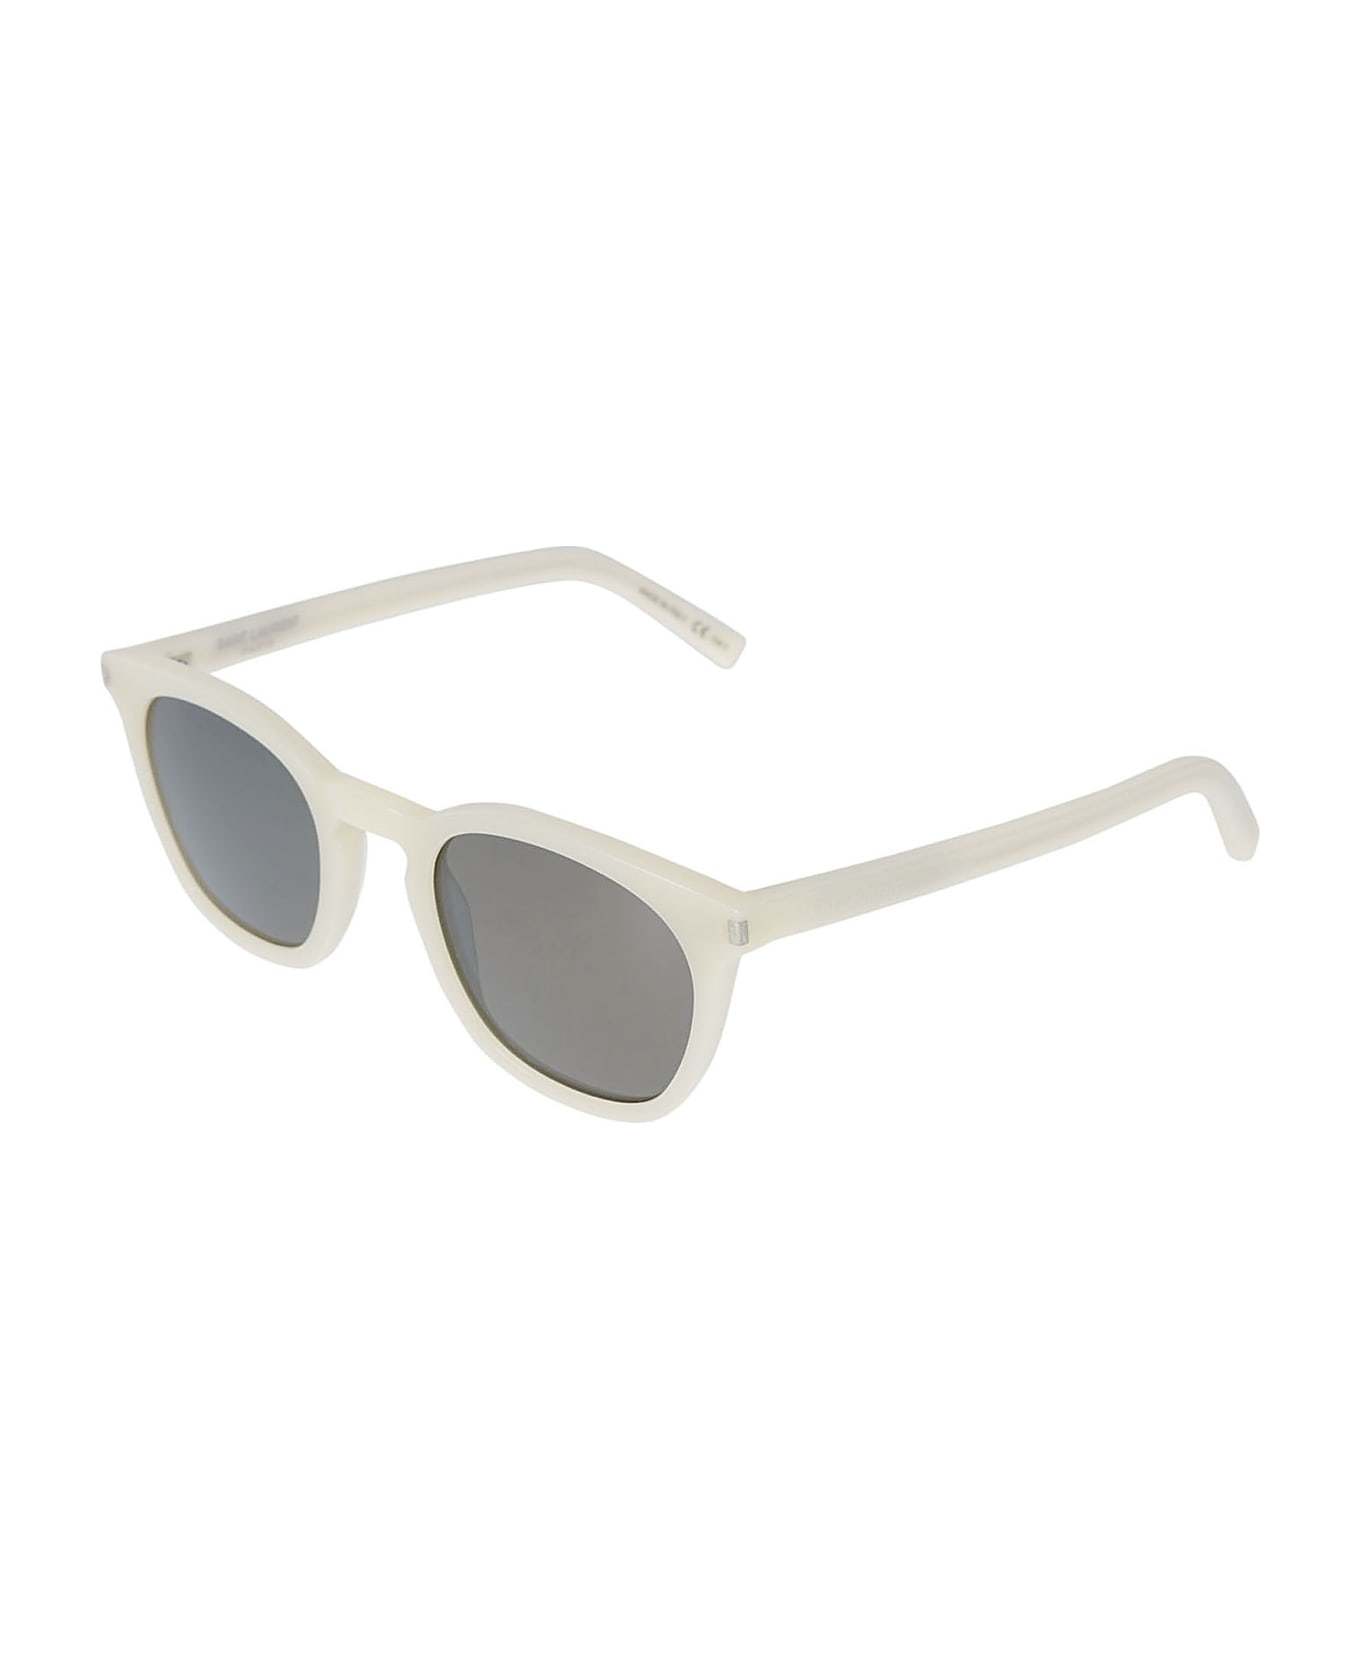 Saint Laurent Eyewear Metal Sunglasses - Ivory/Grey